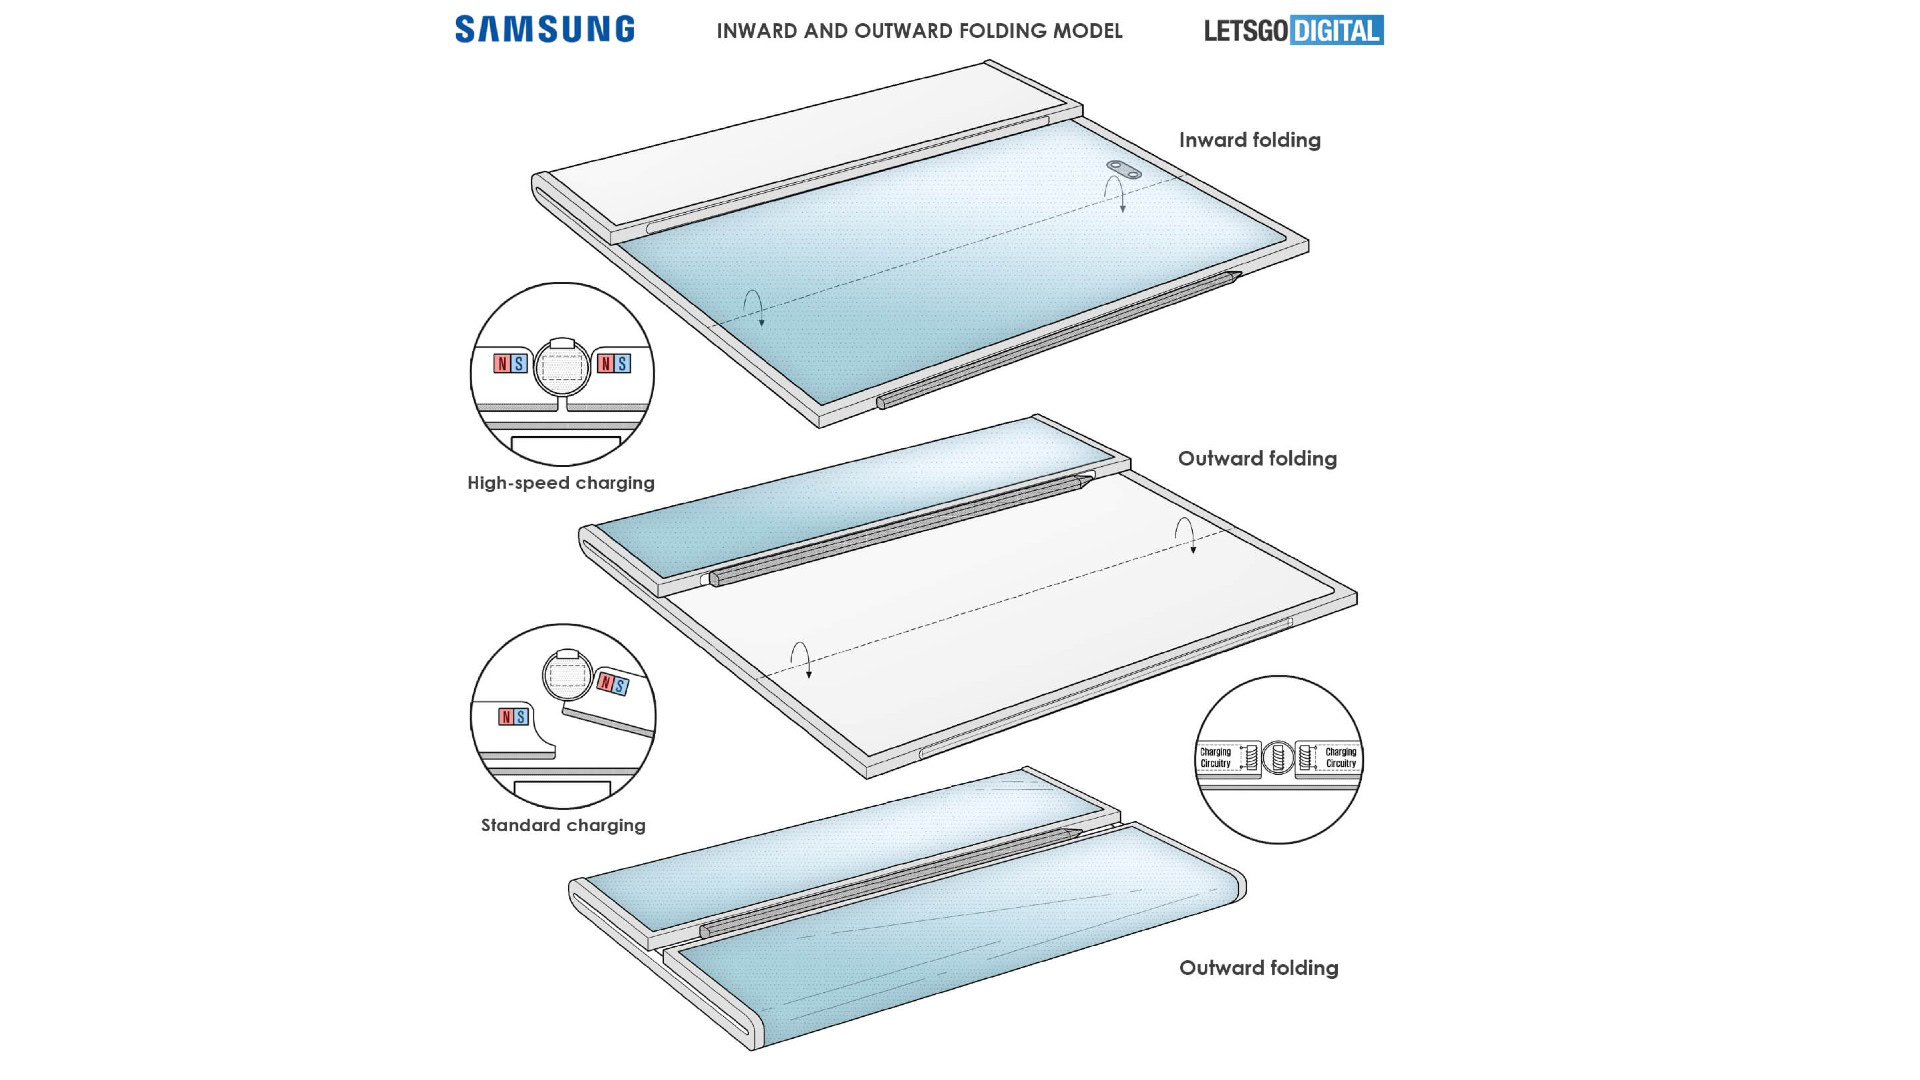 Samsung double folding phone patent